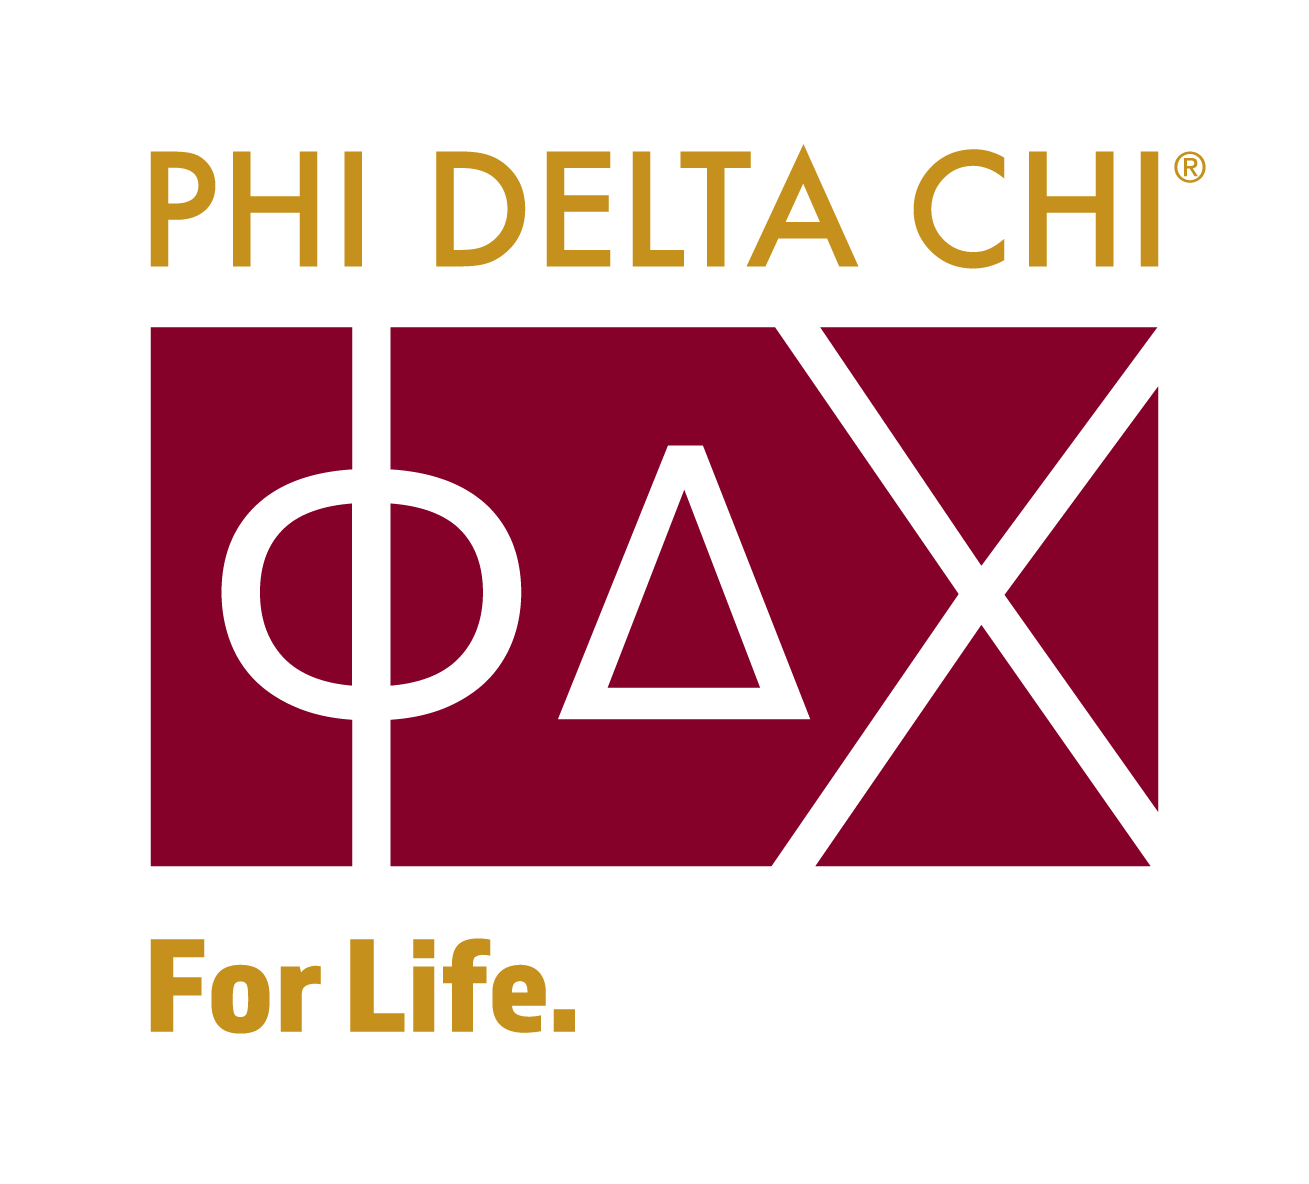 Chi Logo - PDC Logo and Image Usage Delta Chi